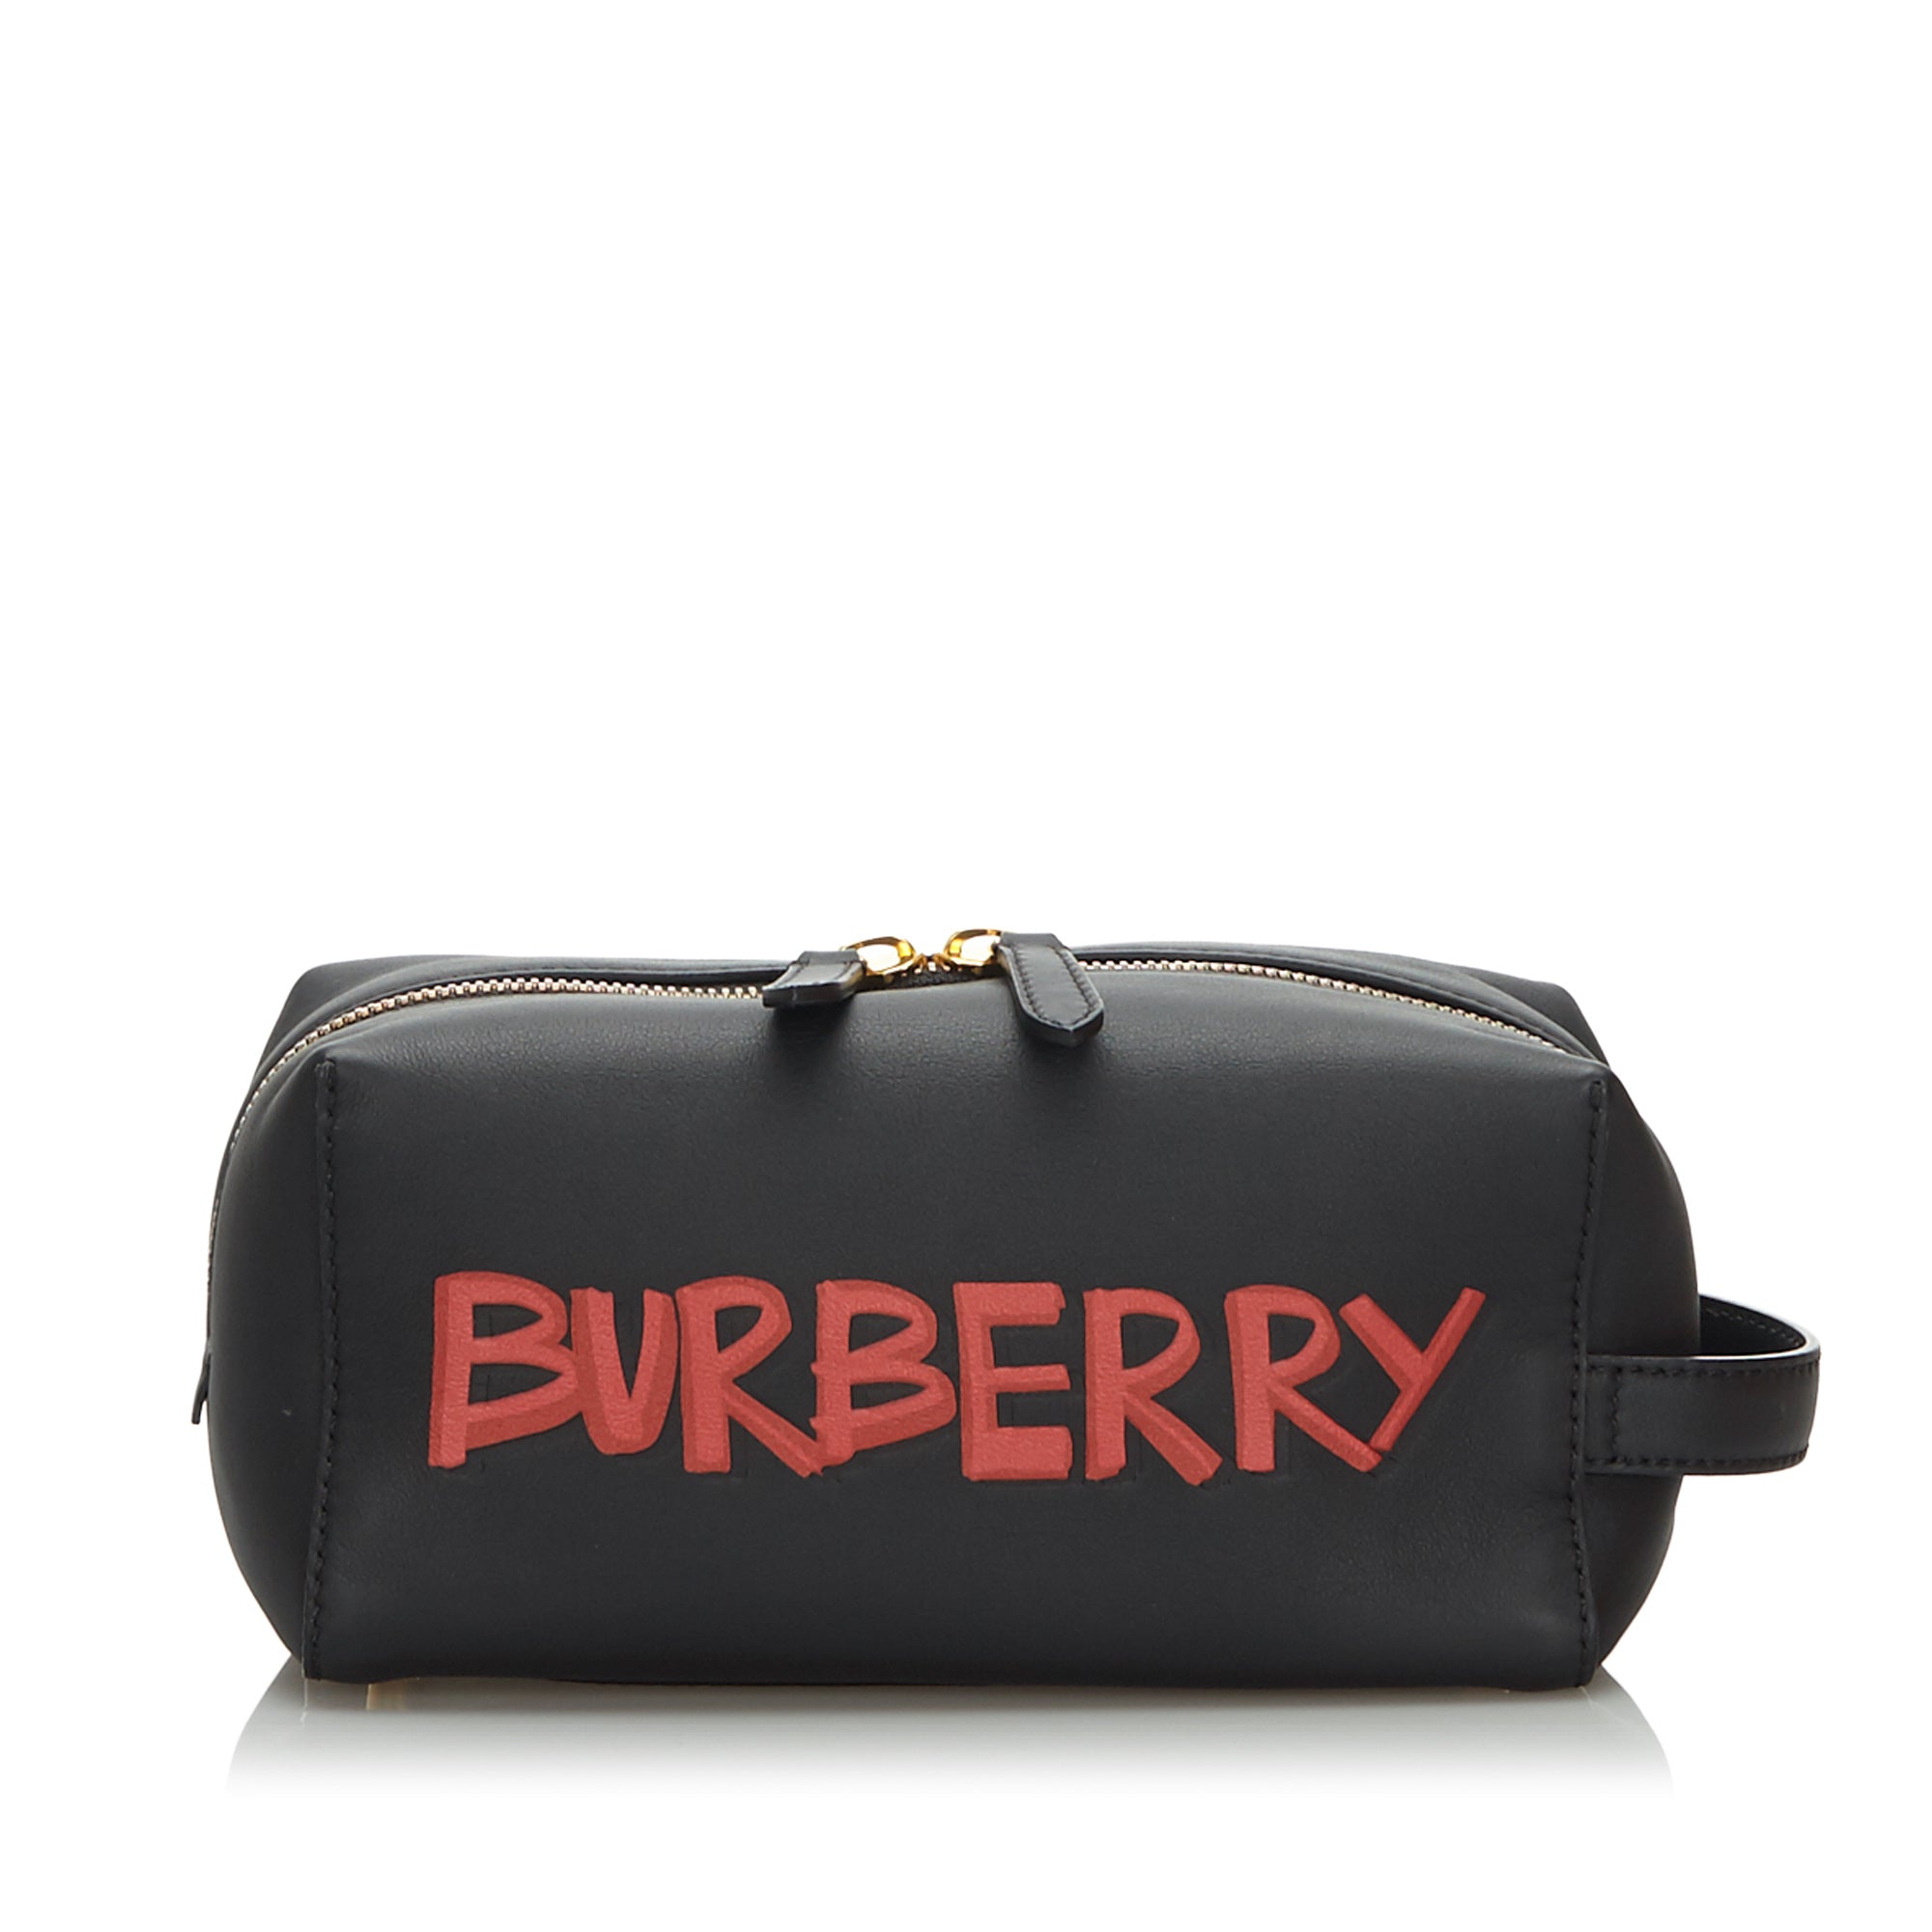 Black Burberry Leather Graffiti Clutch Bag Designer Revival